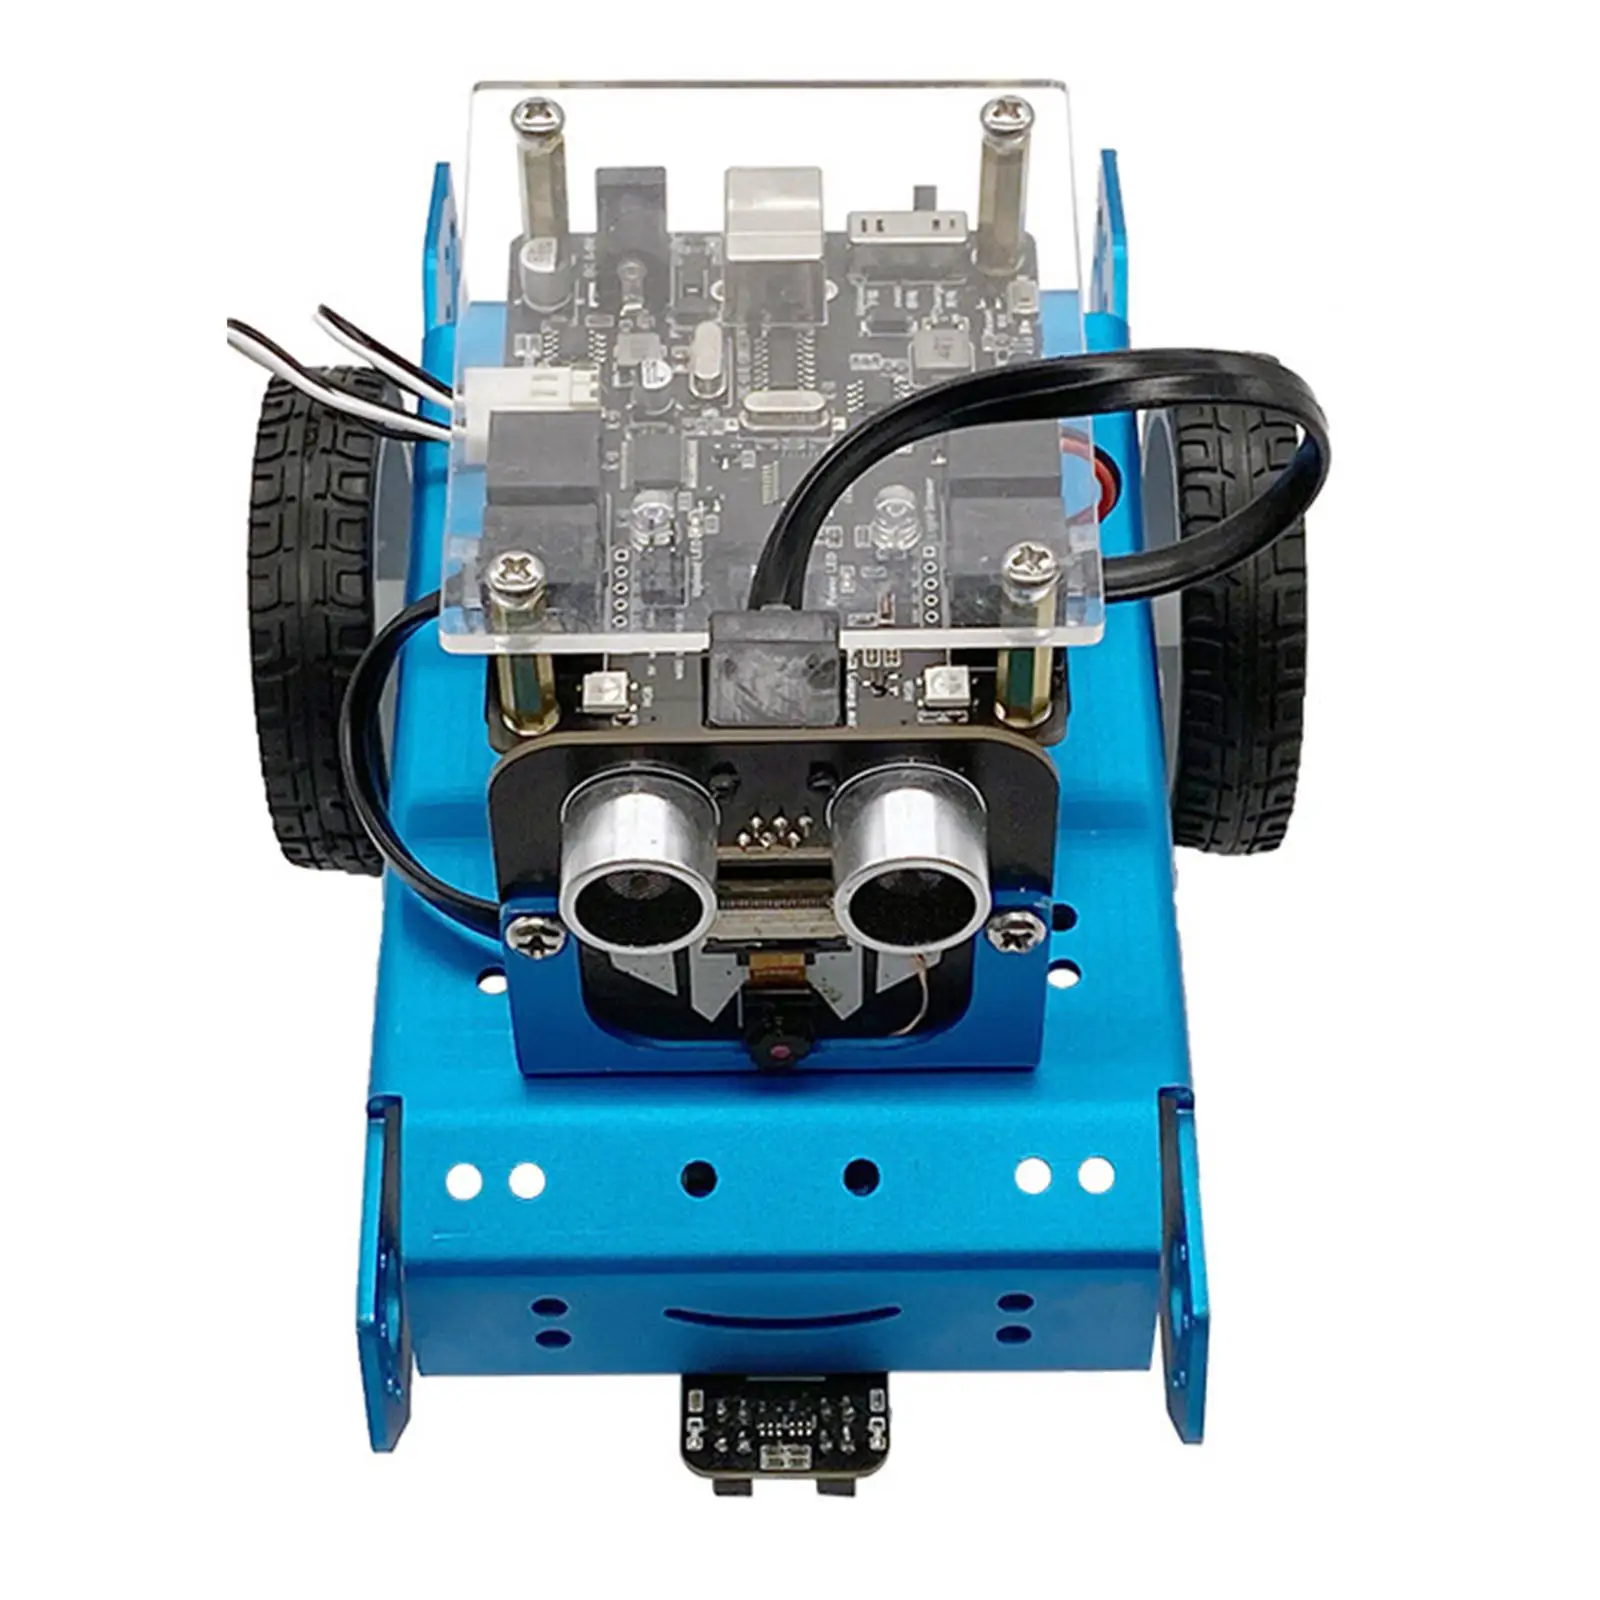 Stem Robot Kits Diy Car Kits for Concentration Thinking Birthday Gifts